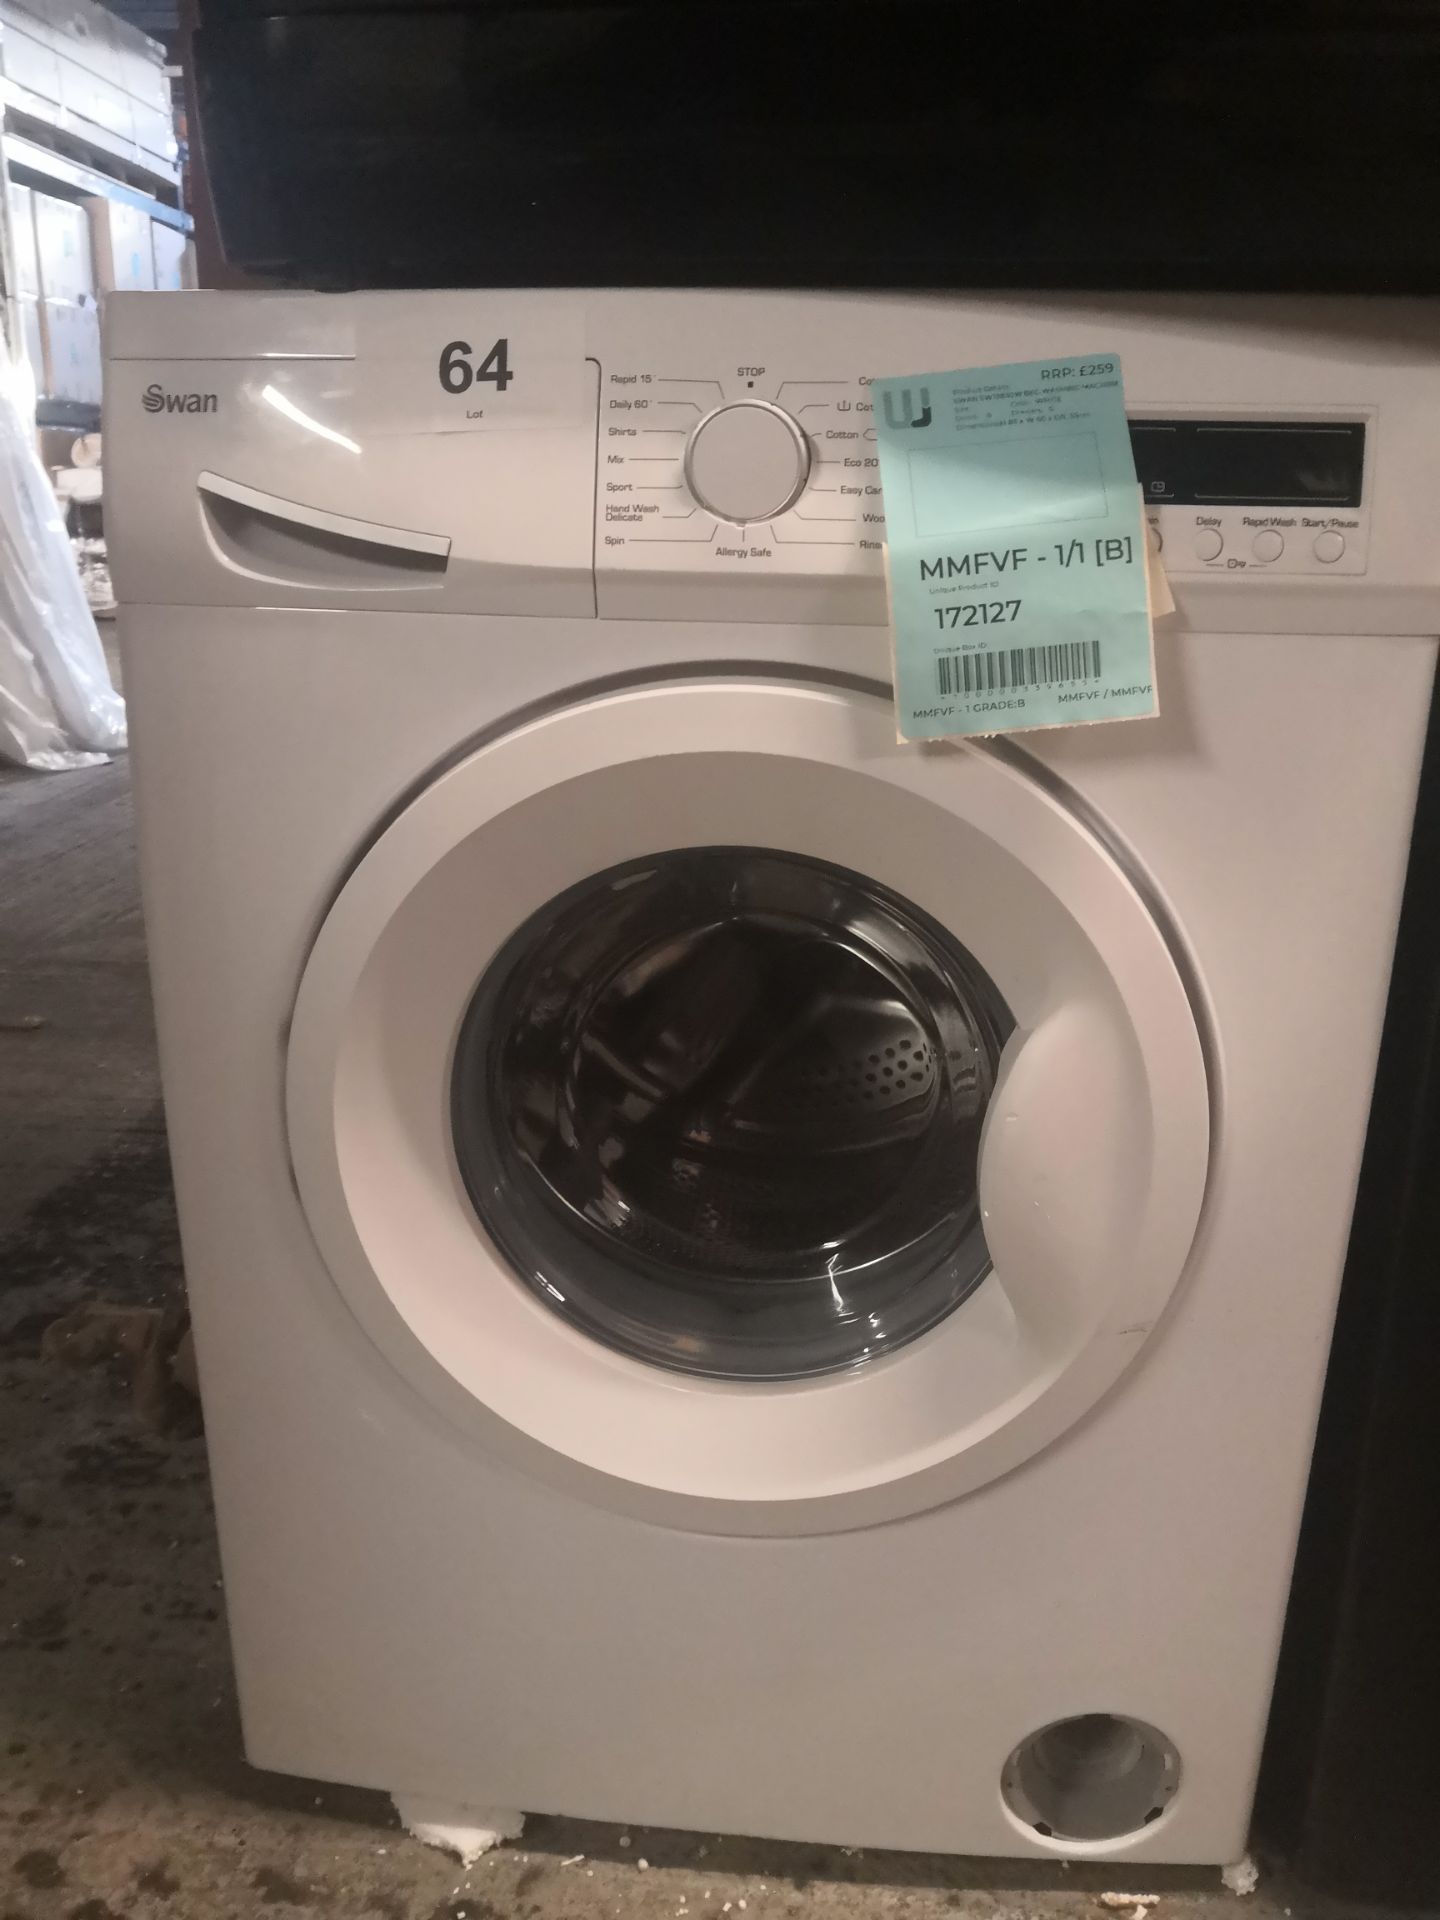 Swan sw15830w 8kg washing machine [white] 85x60x55cm rrp: £310.0 - Image 2 of 2